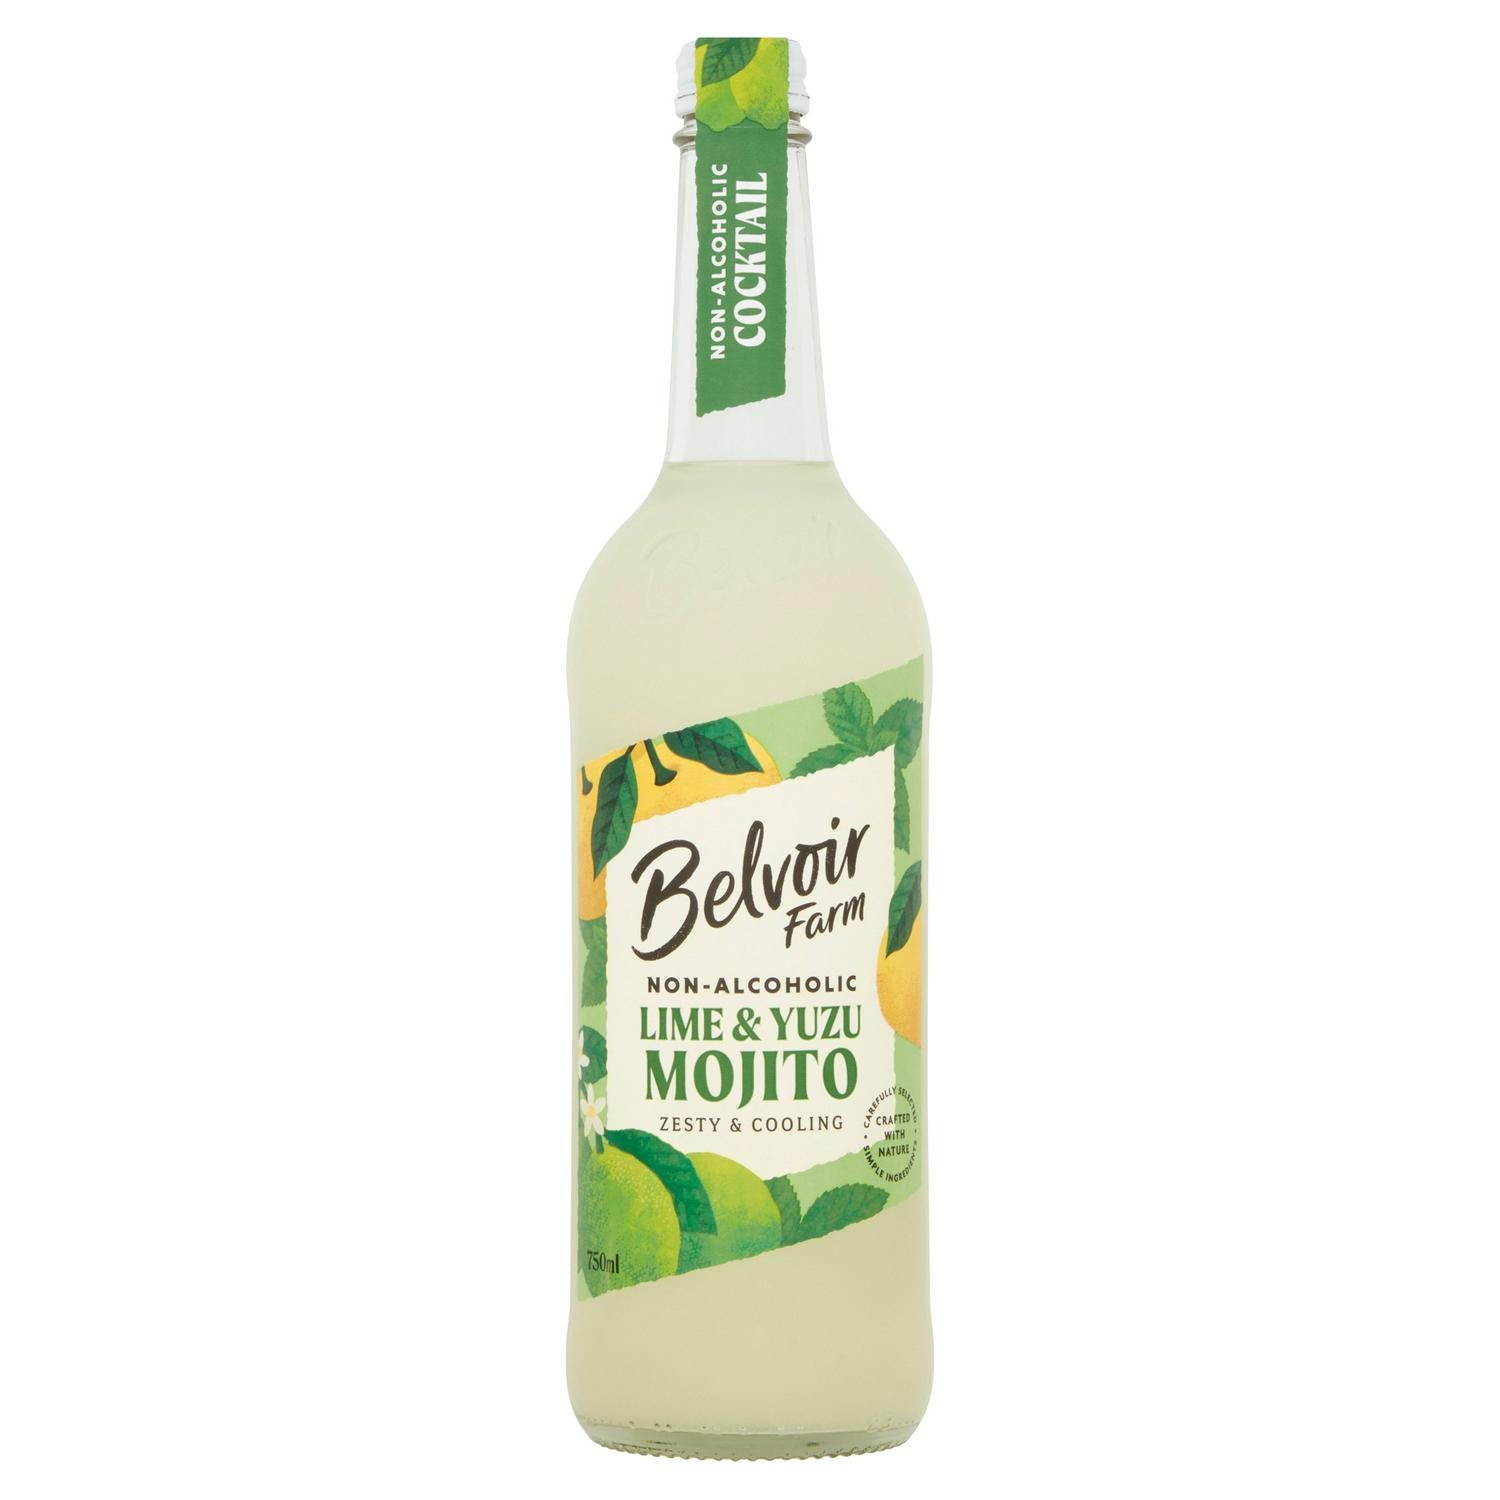 Belvoir Farm Non-Alcoholic Lime & Yuzu Mojito 750ml